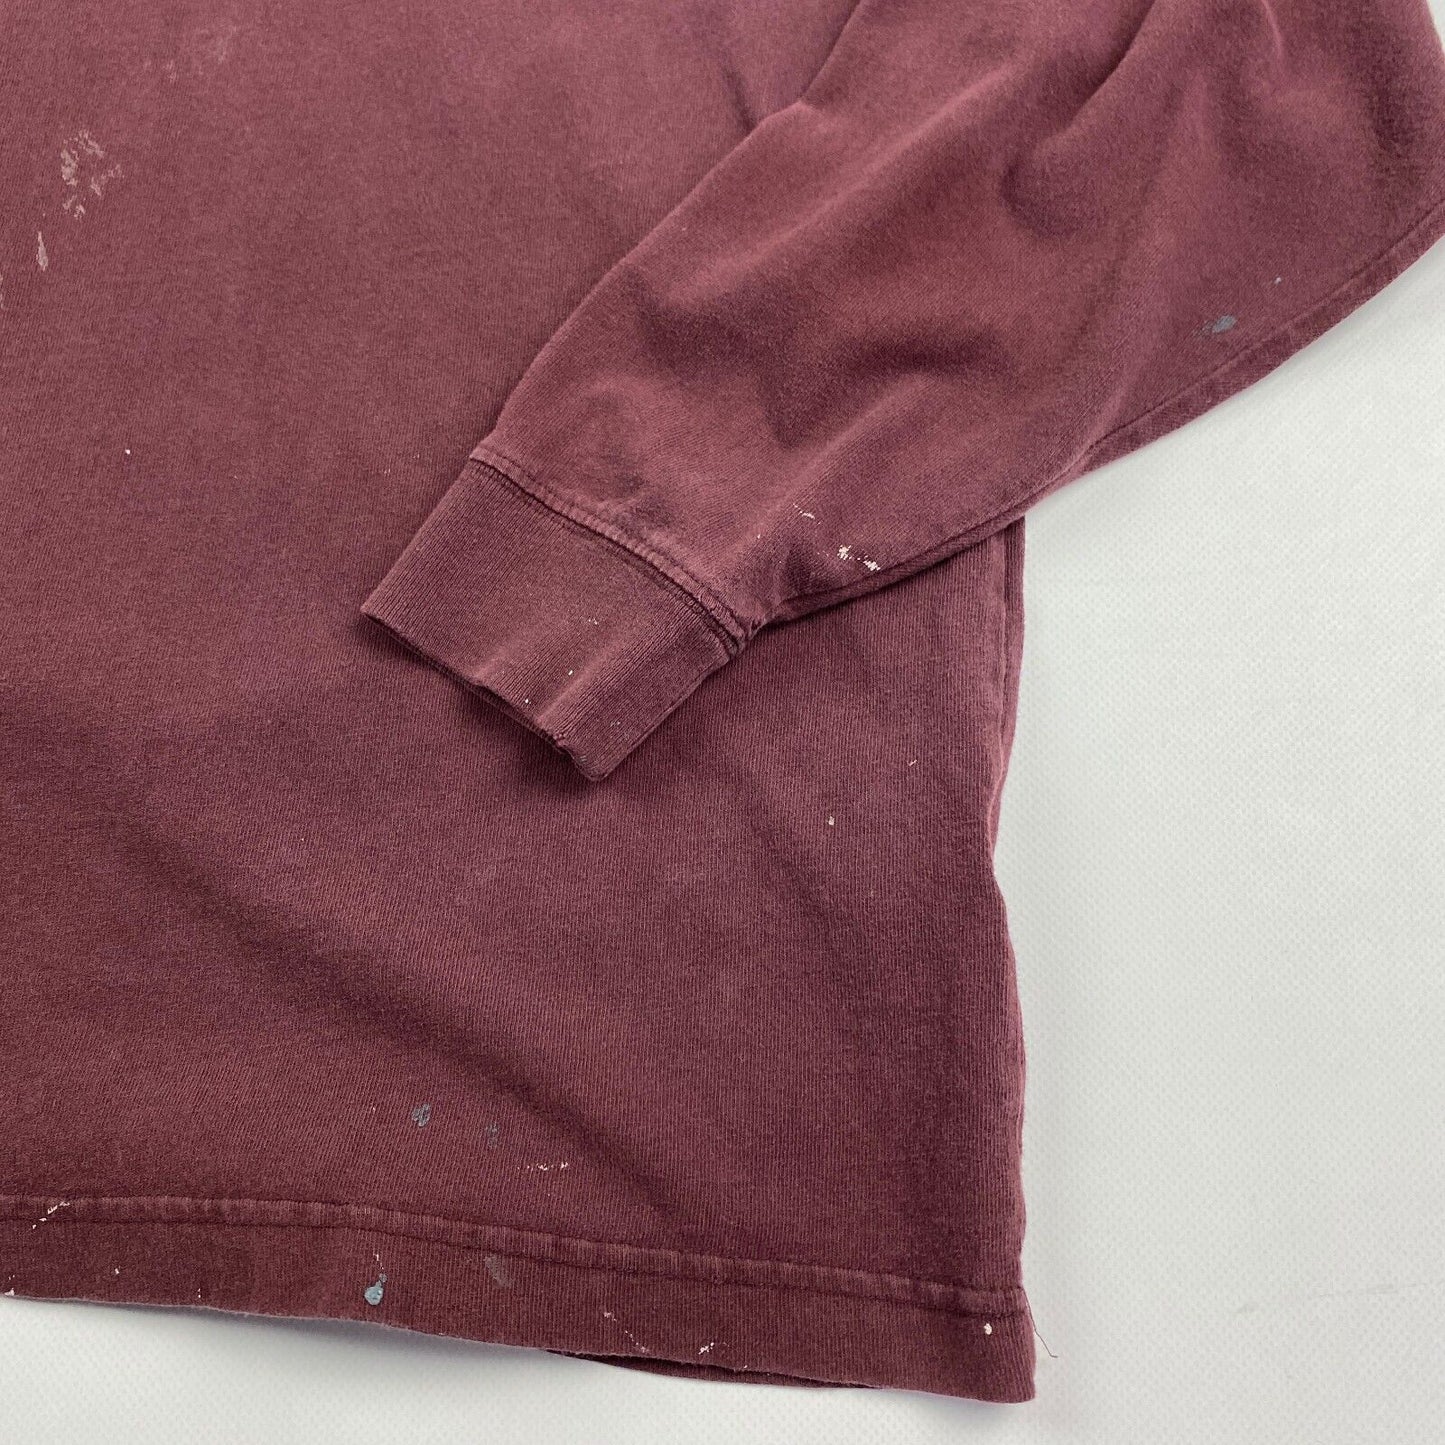 Carhartt Maroon Paint Splatter Long Sleeve Pocket T-Shirt sz Large Men